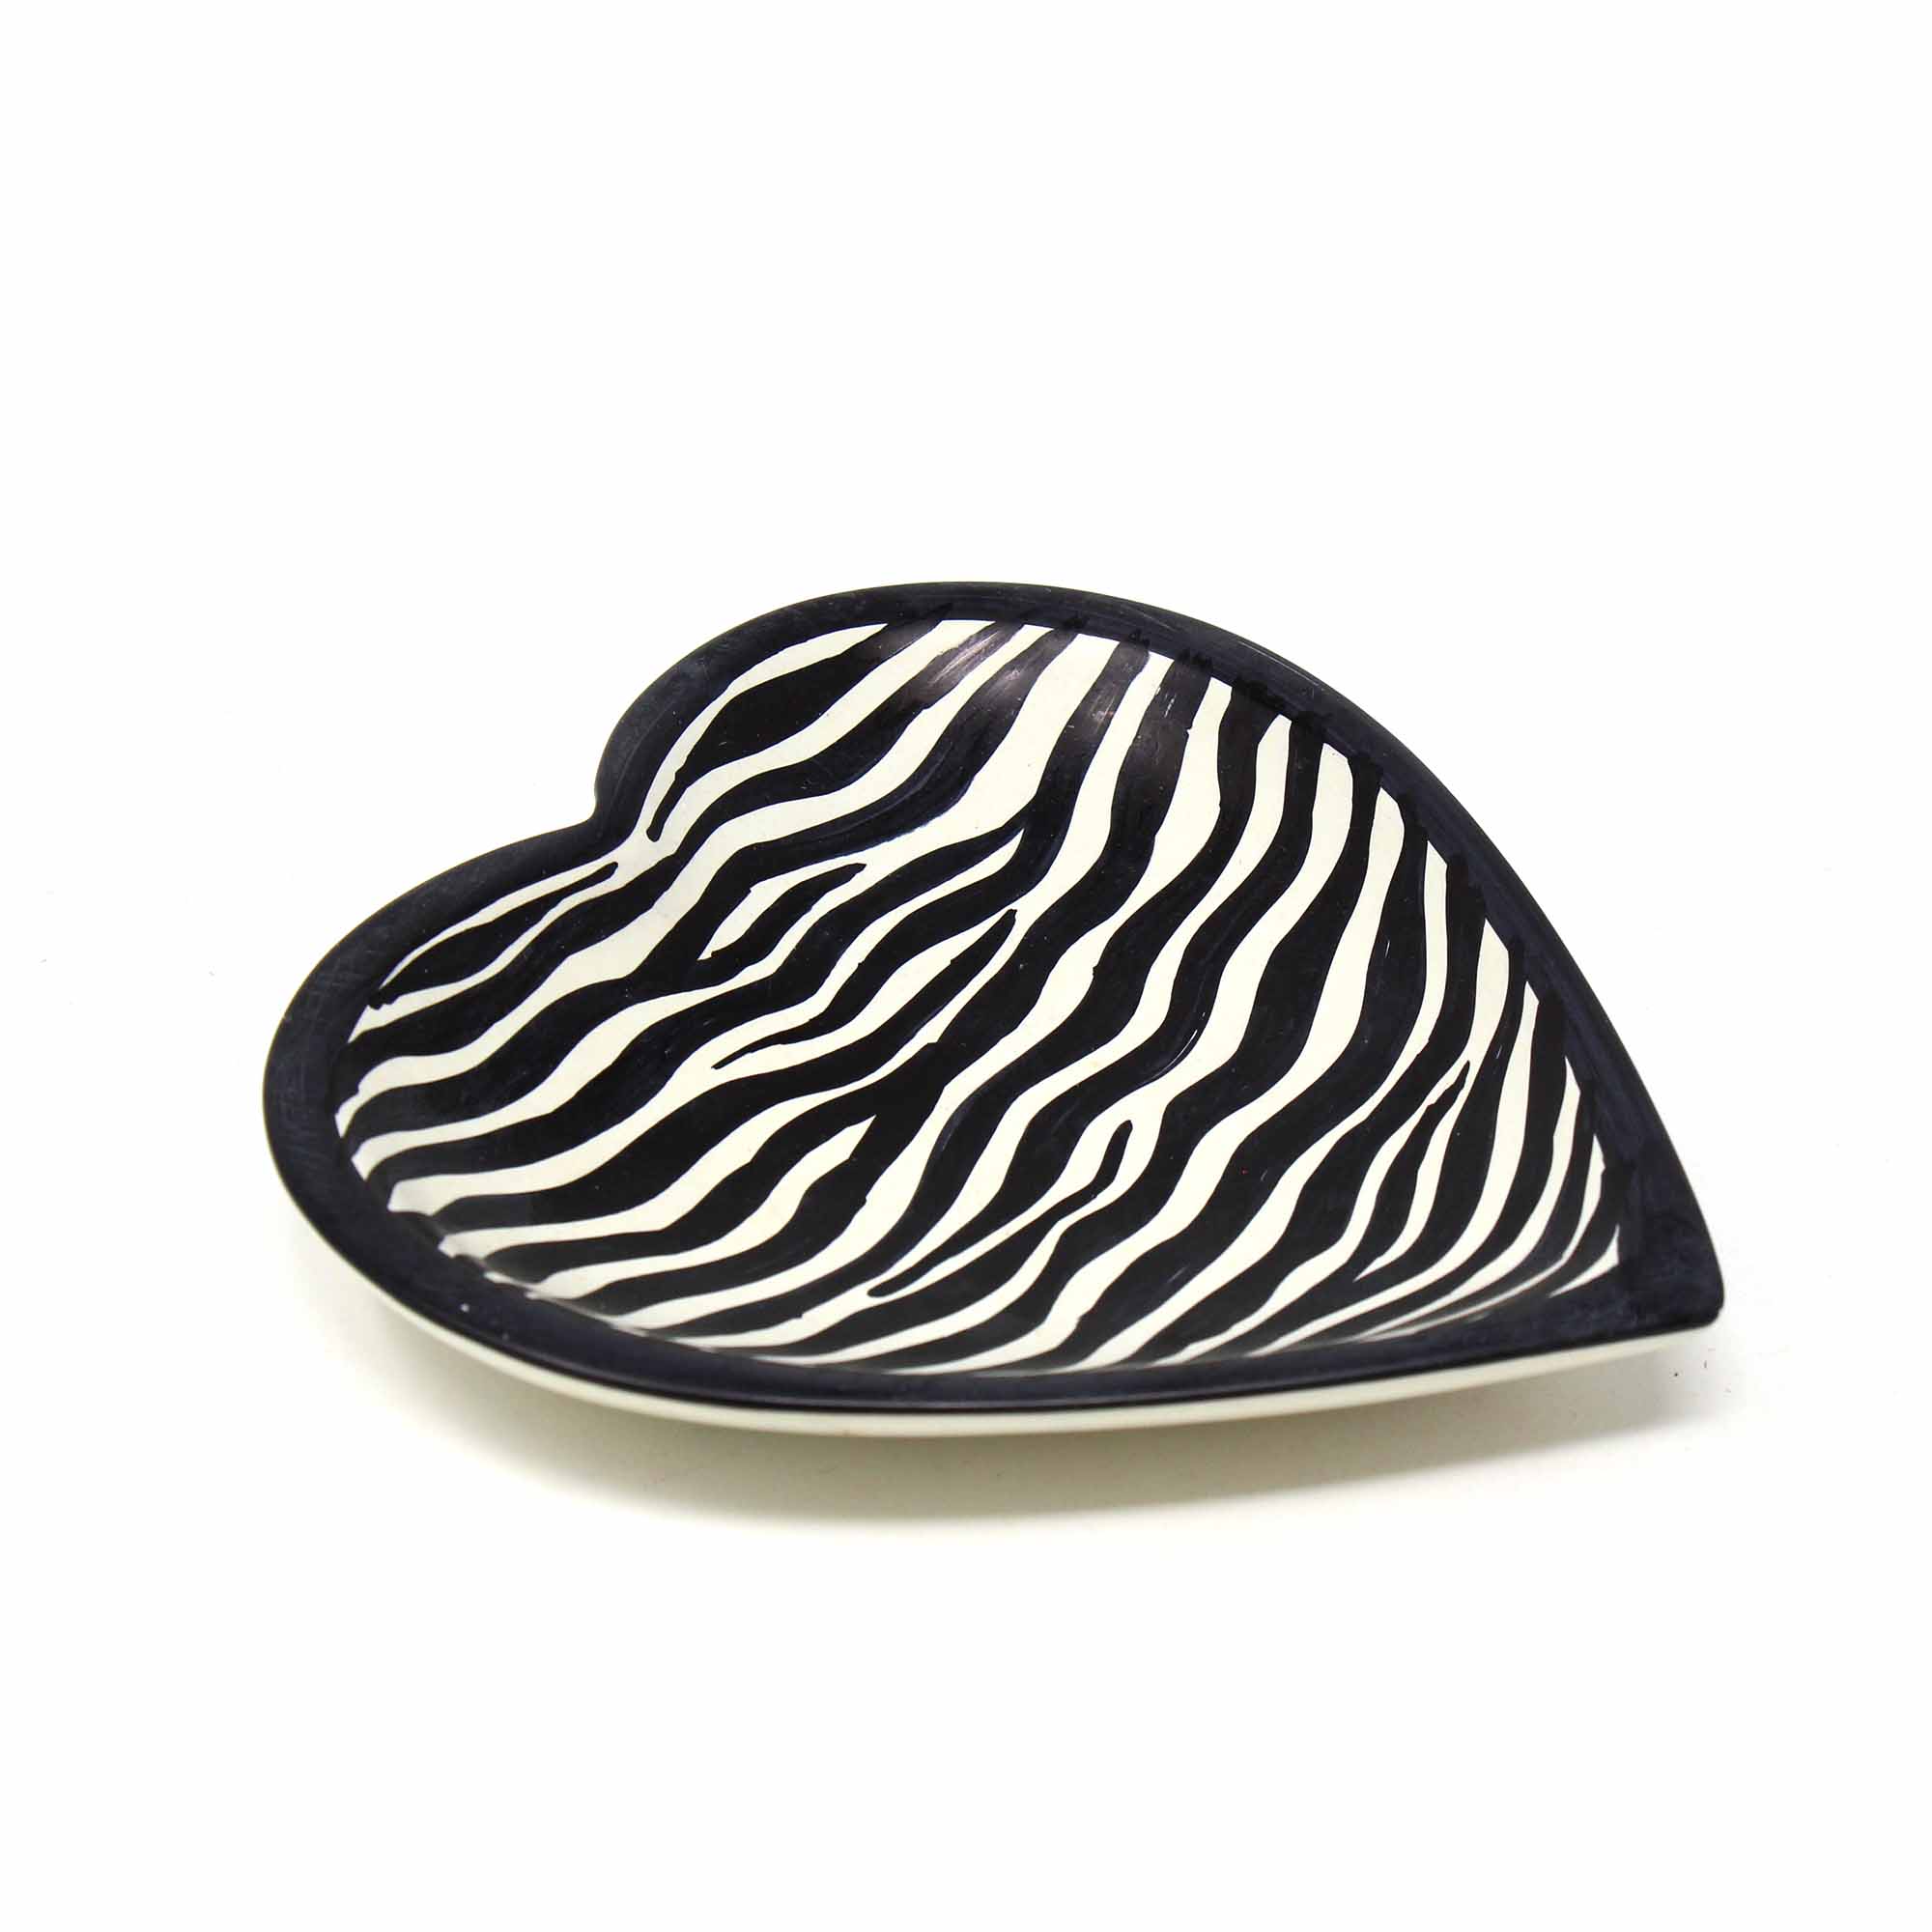 Soapstone Heart Bowl - Small - Modern Zebra Pattern